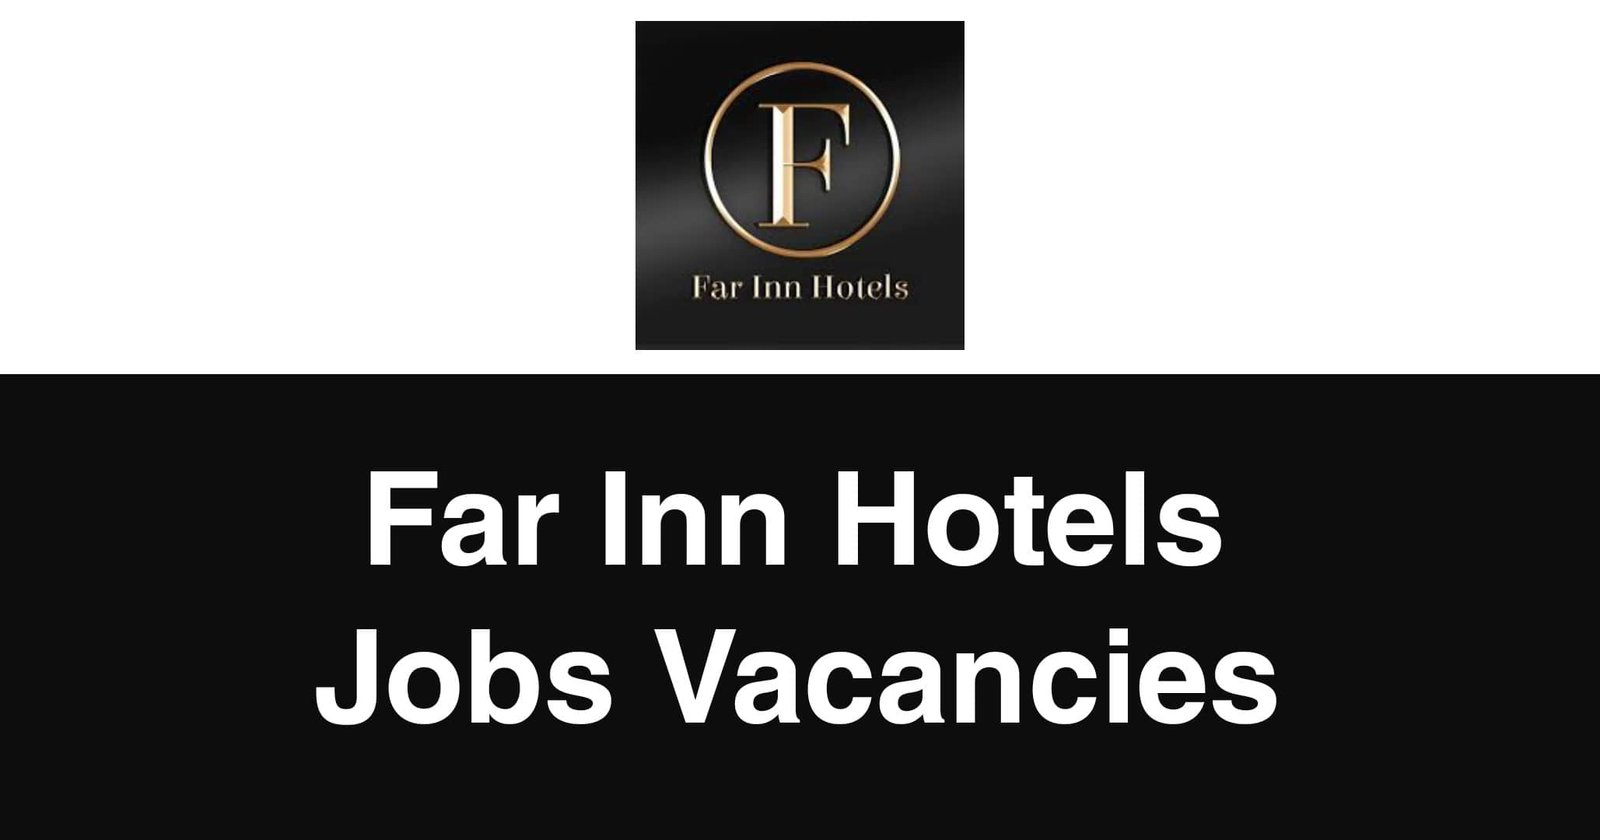 Far Inn Hotels Jobs Vacancies